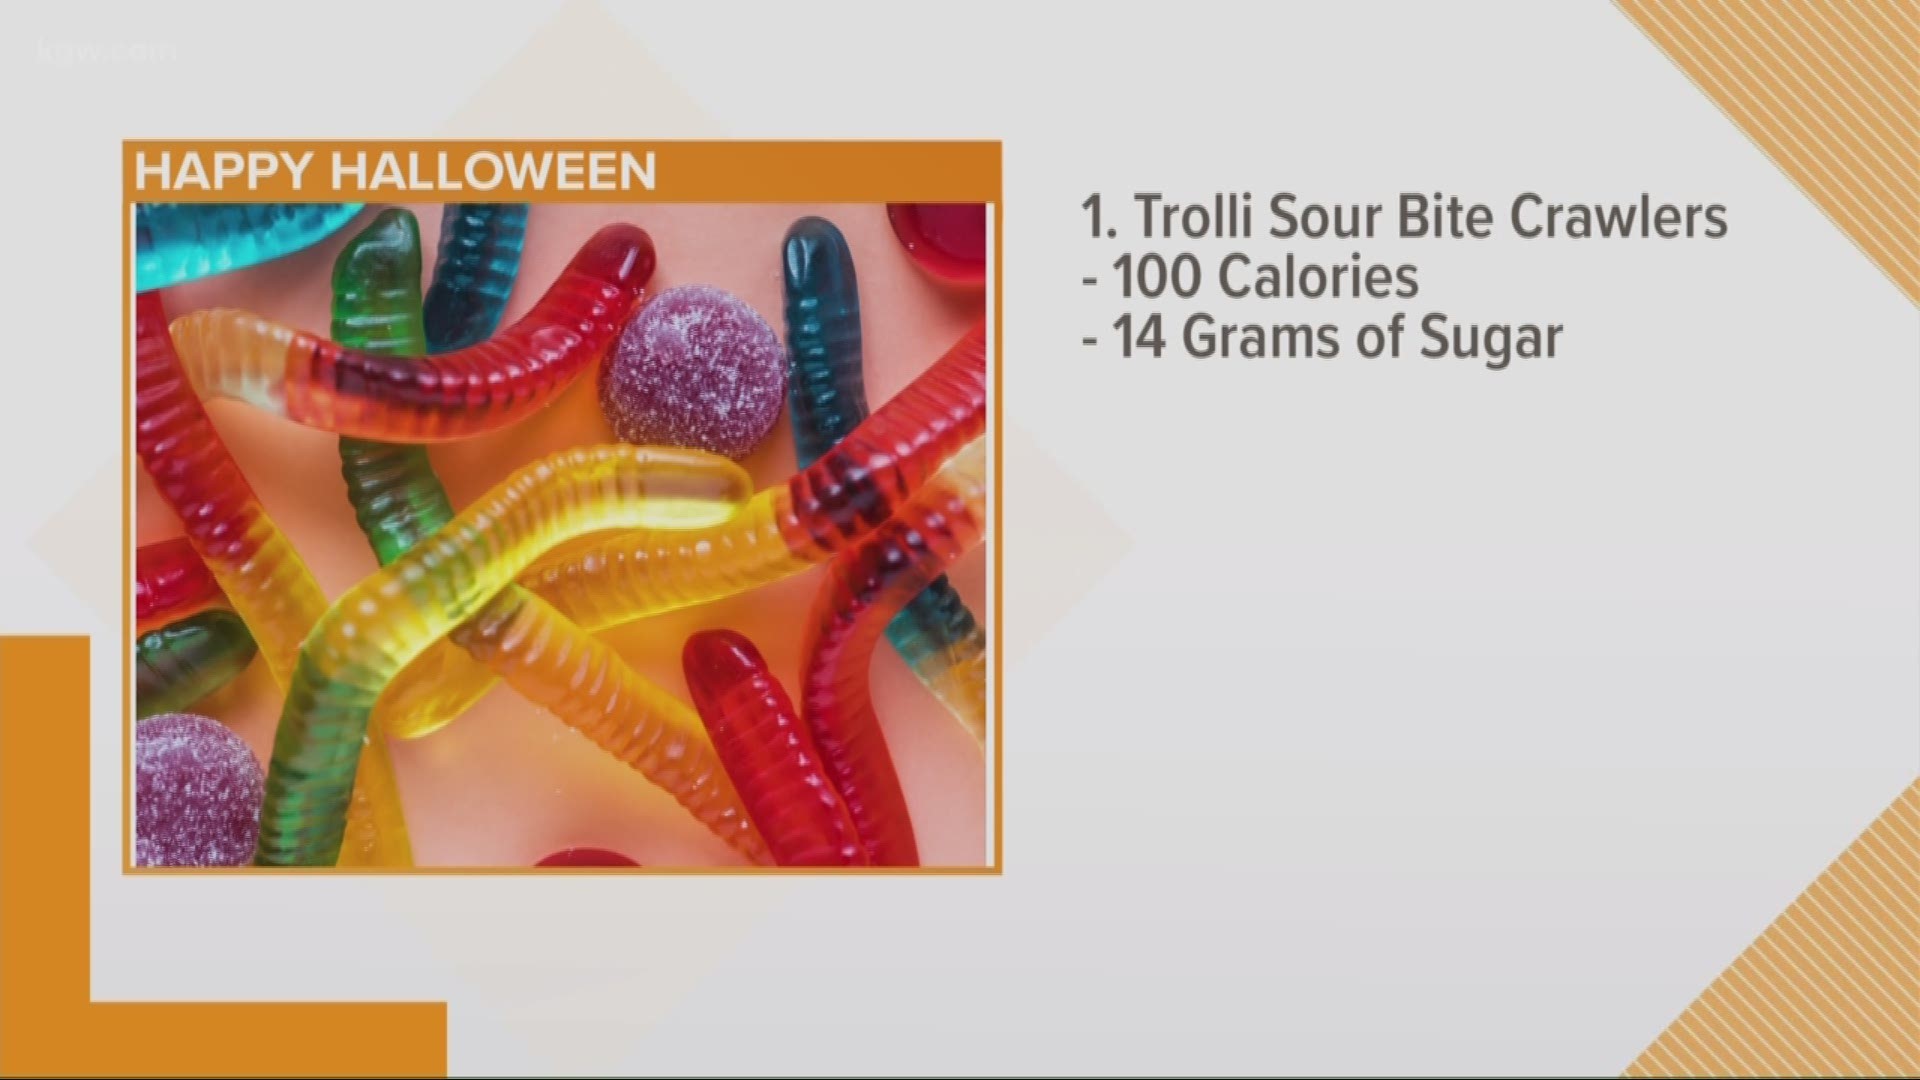 Nutritionists rank Halloween candies